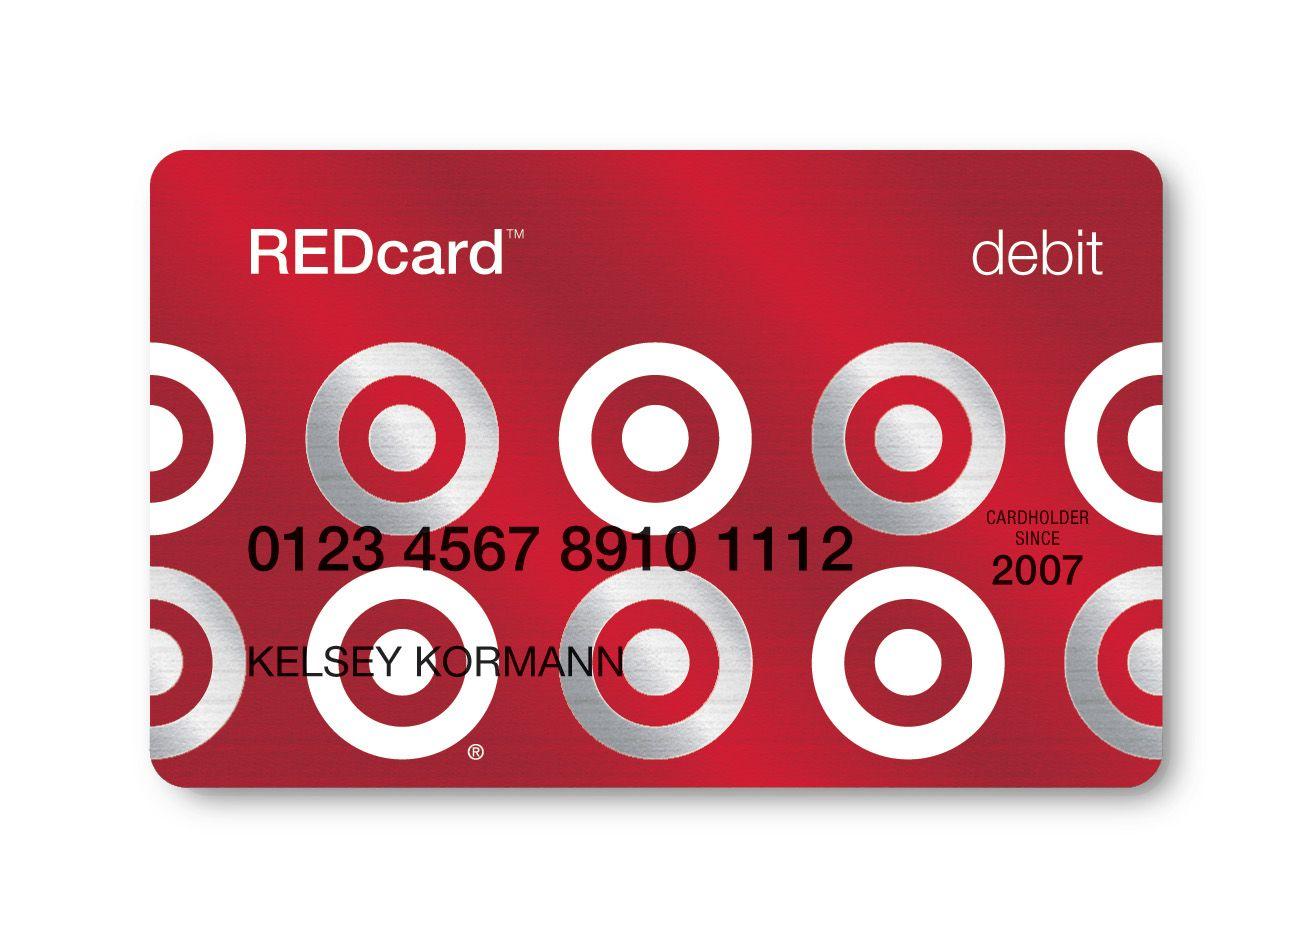 Target Red Card Logo - Target Cardholders Receive 5% Off Beginning this Weekend